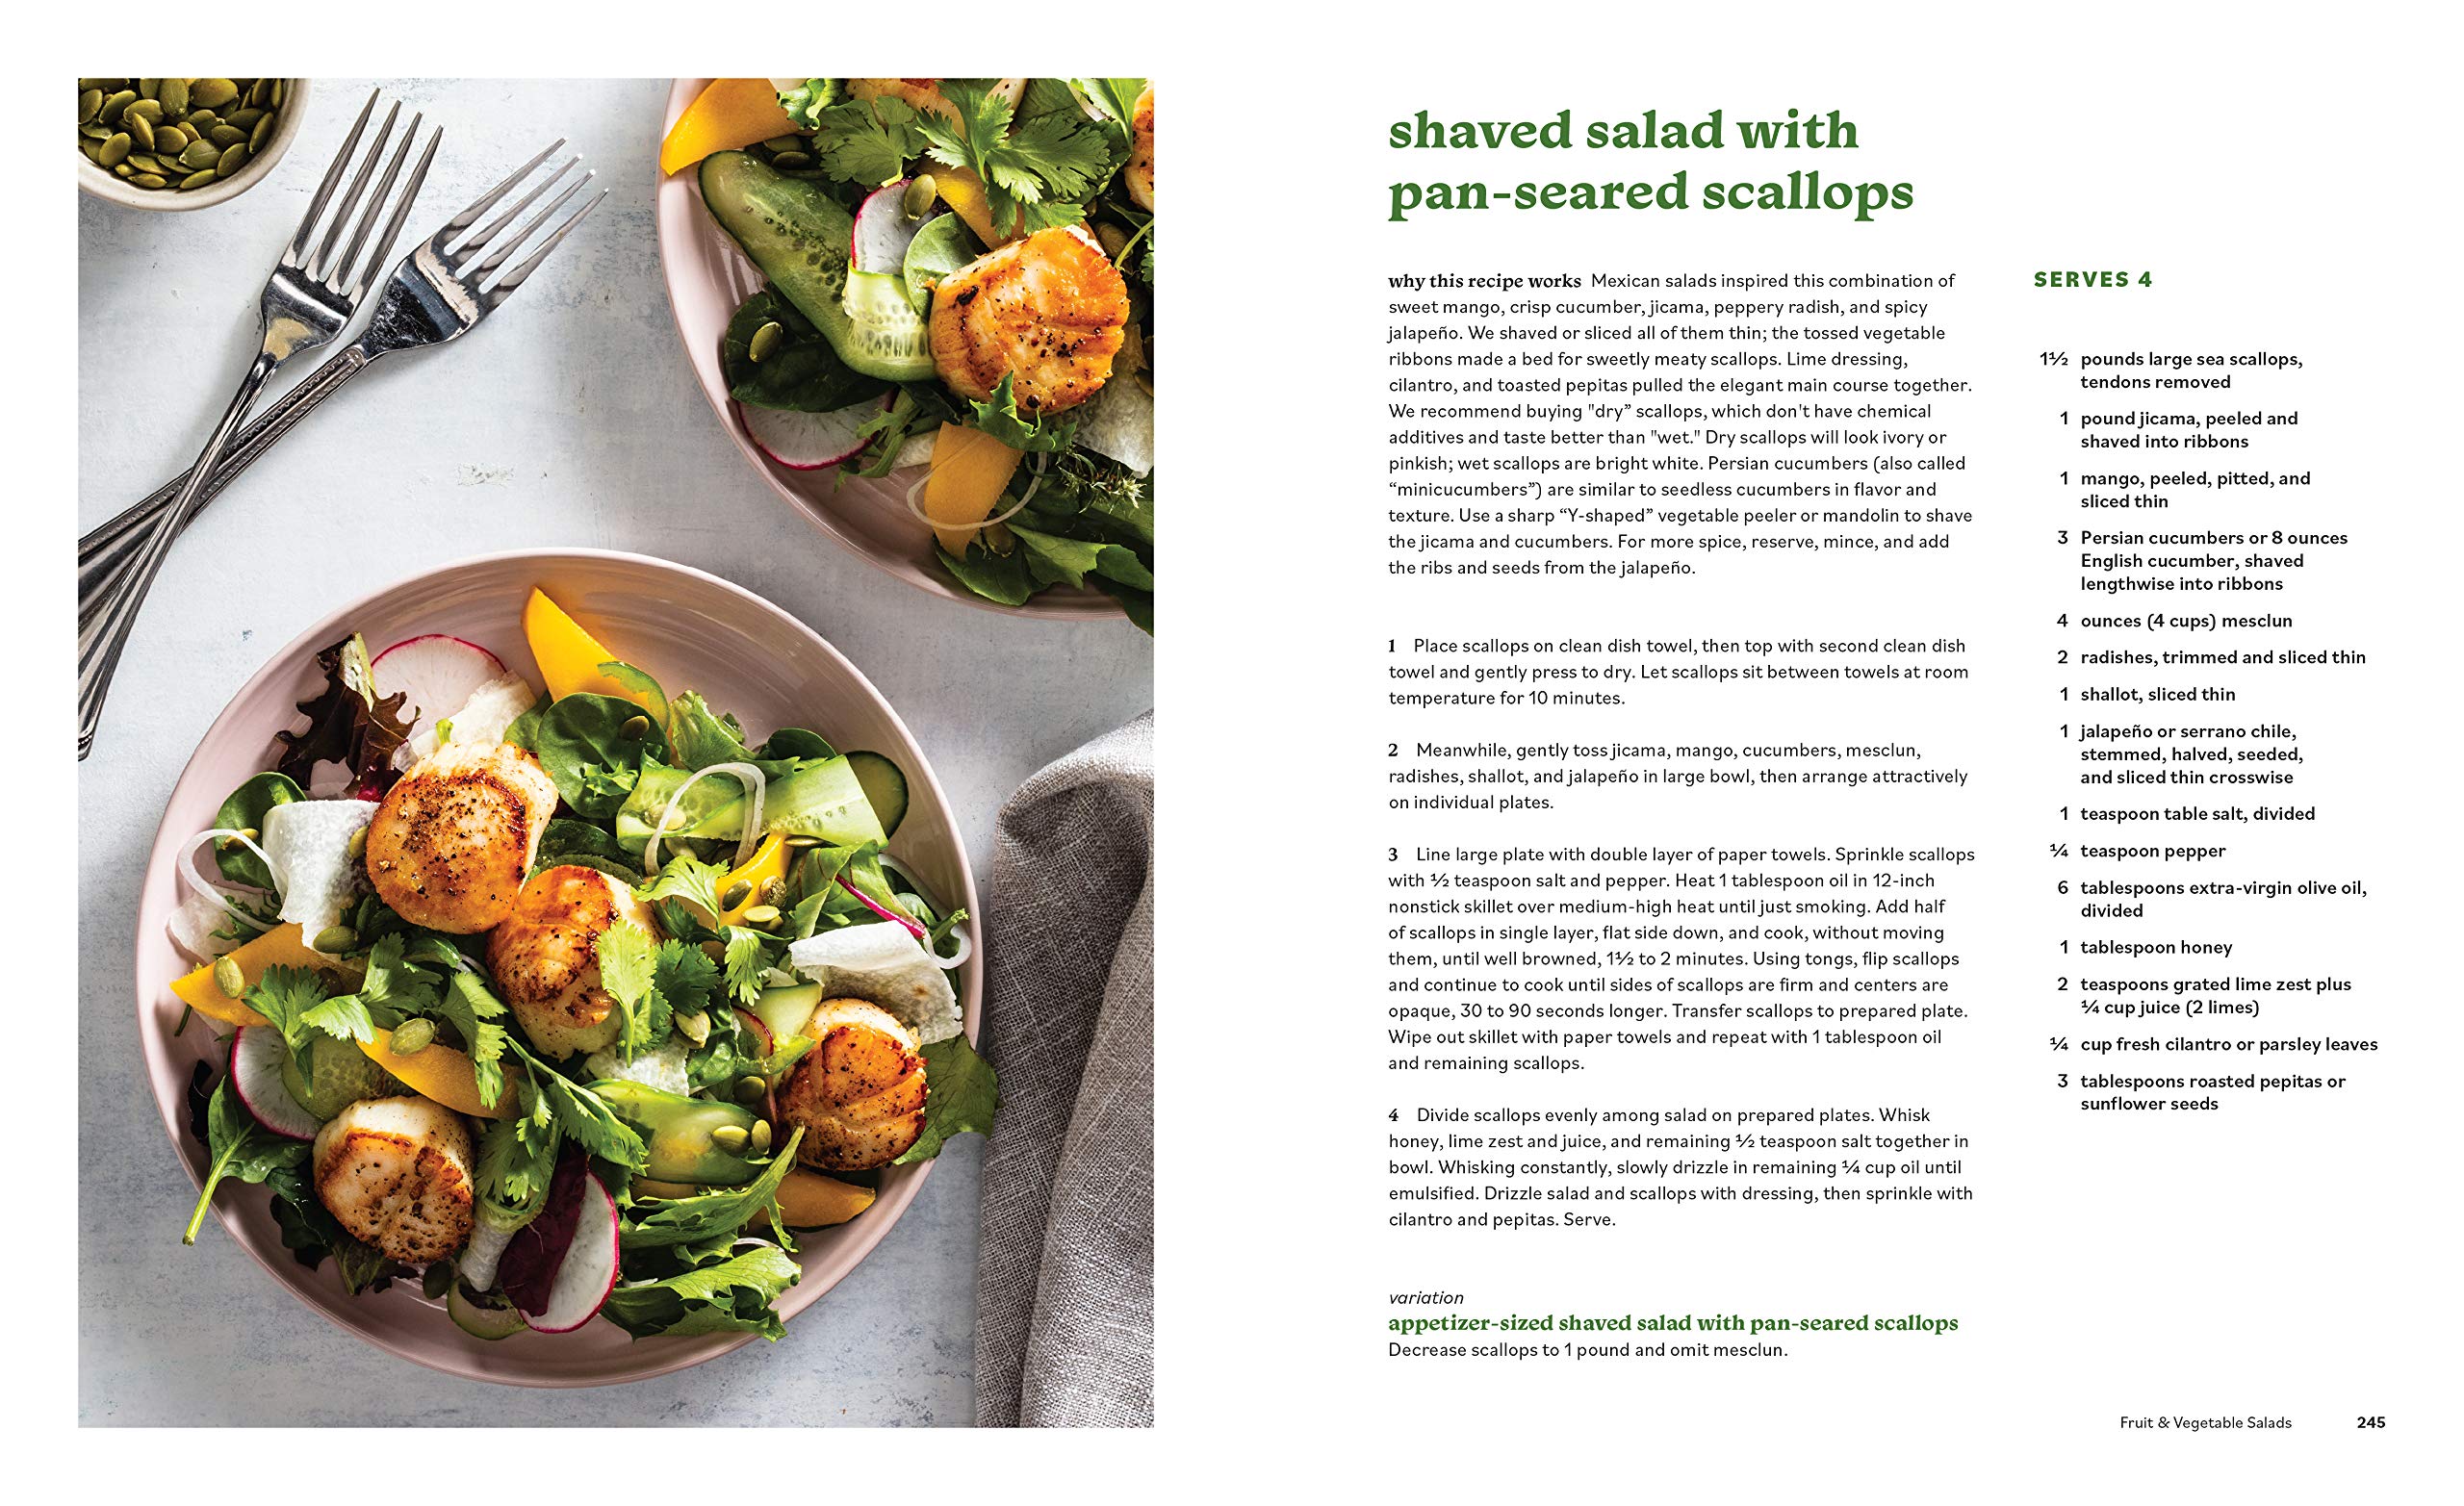 The Complete Salad Cookbook (America's Test Kitchen)